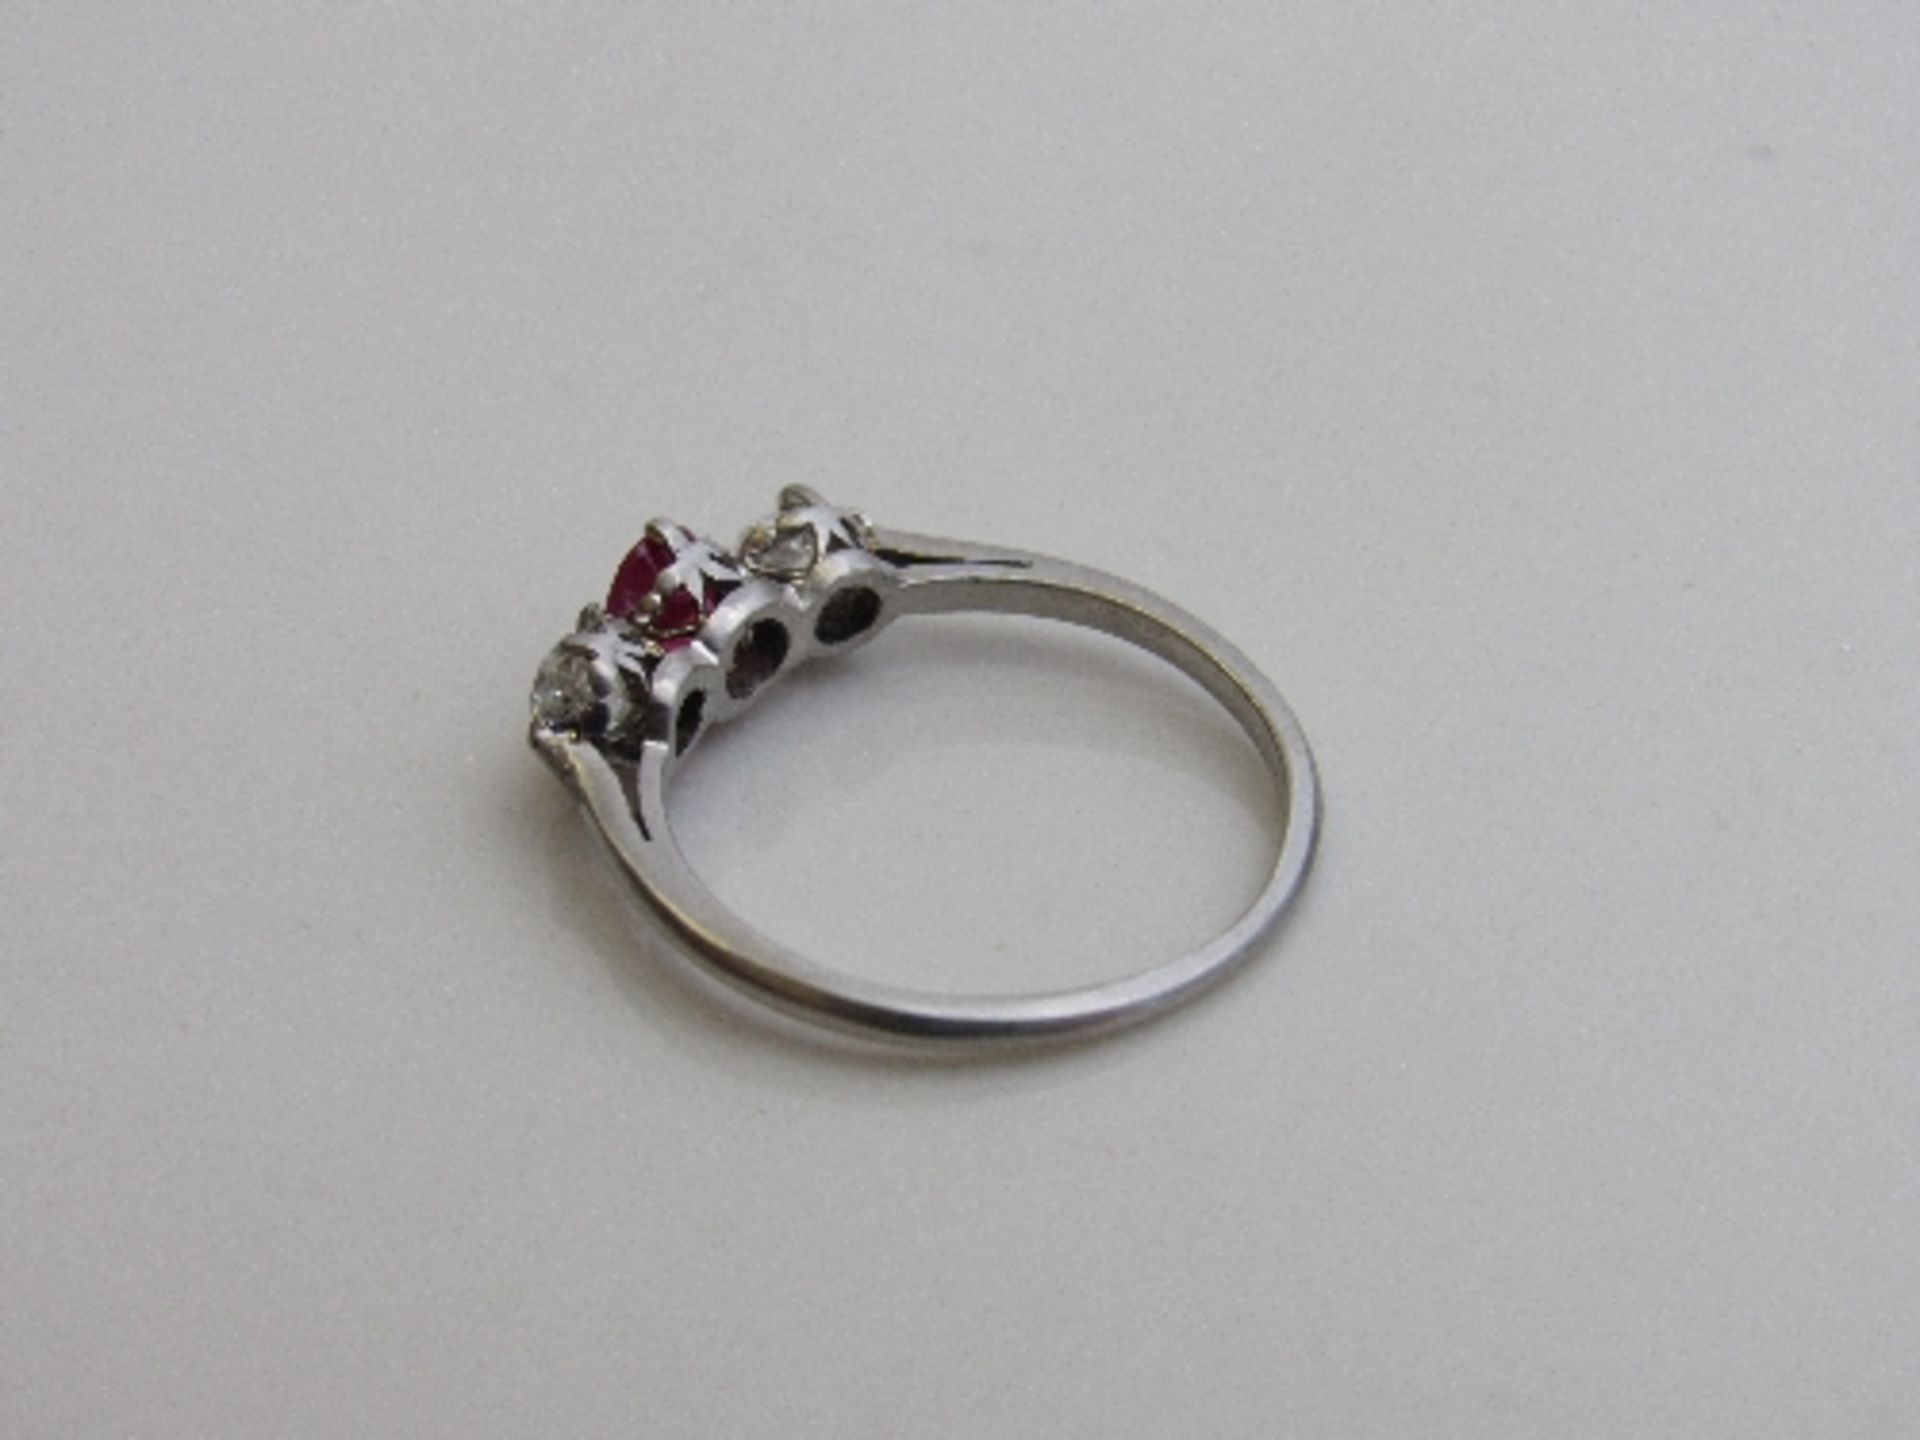 Platinum, diamond & ruby ring, size J 1/2, weight 2.3gms. Estimate £450-480 - Image 3 of 4